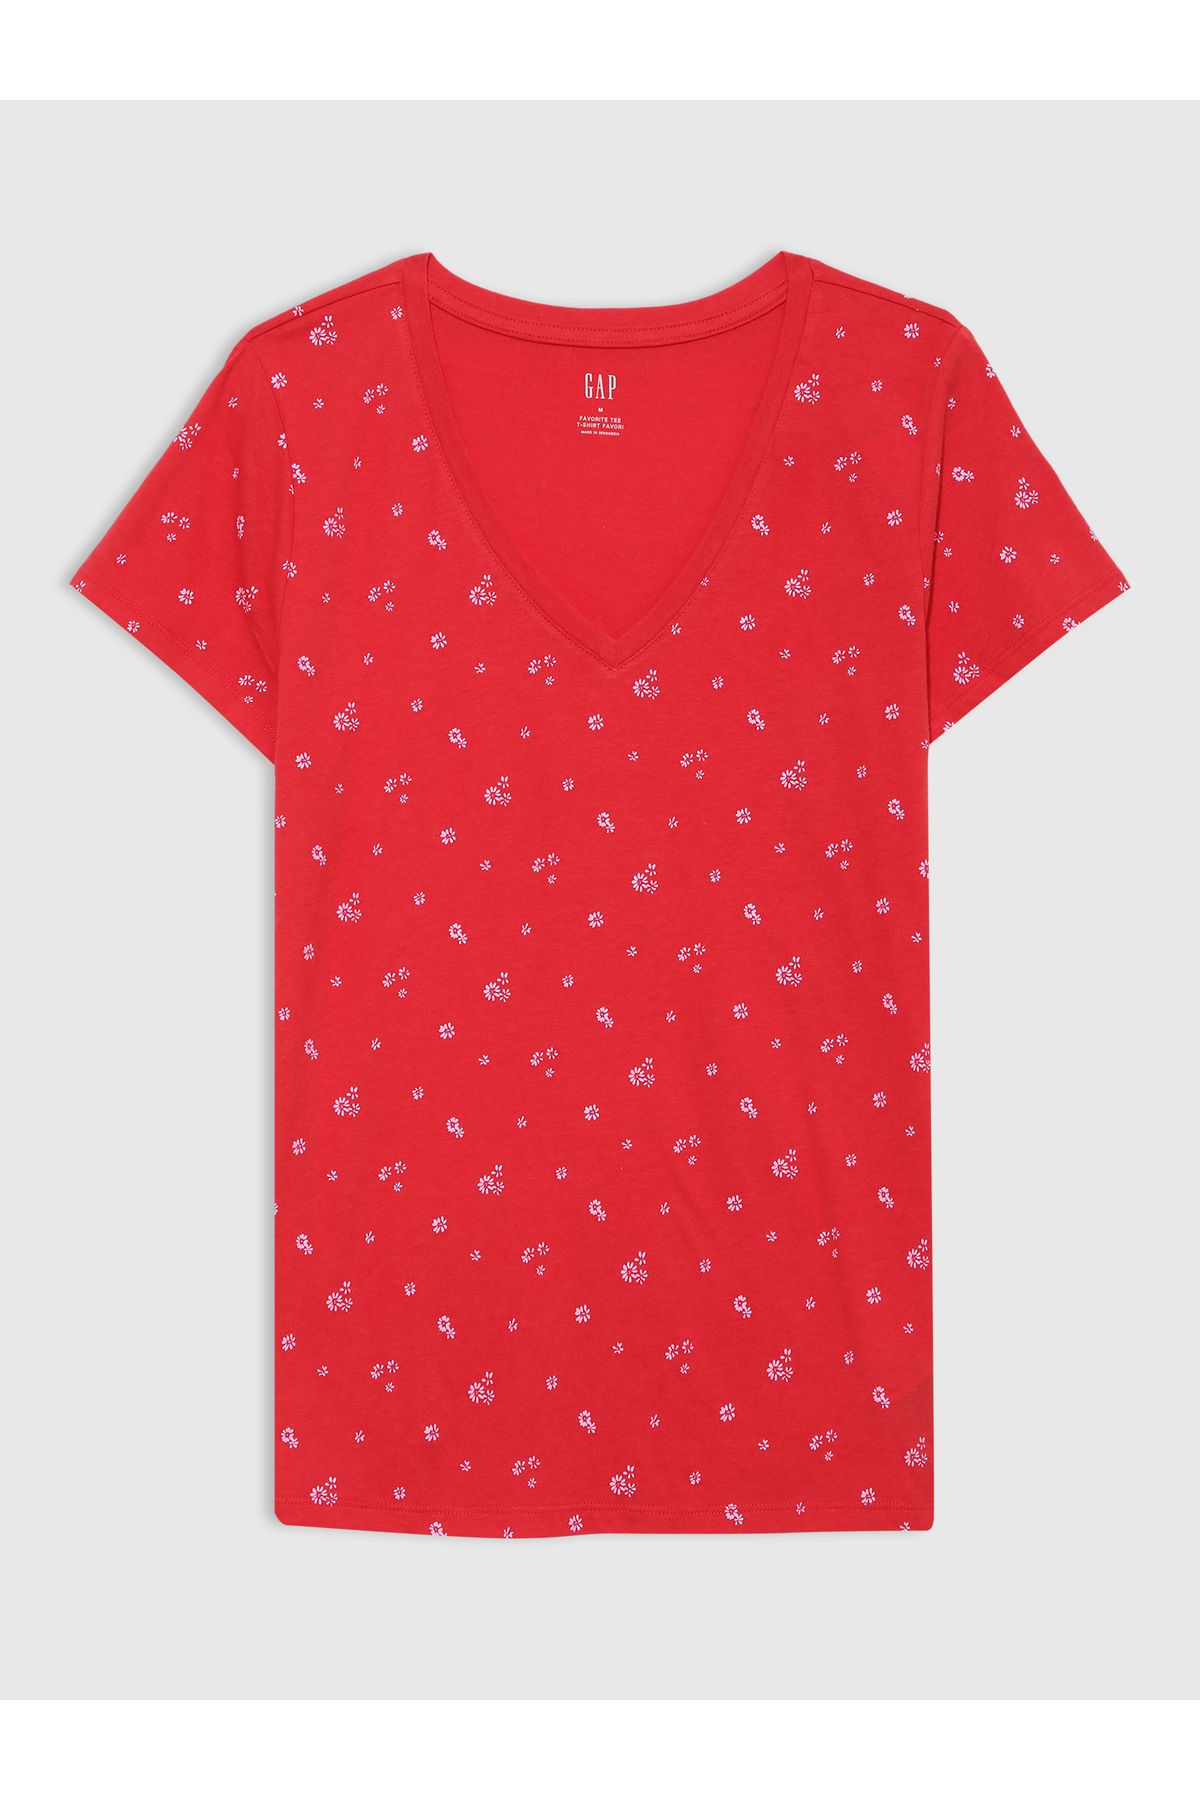 GAP Kadın Kırmızı Favorite V Yaka T-Shirt